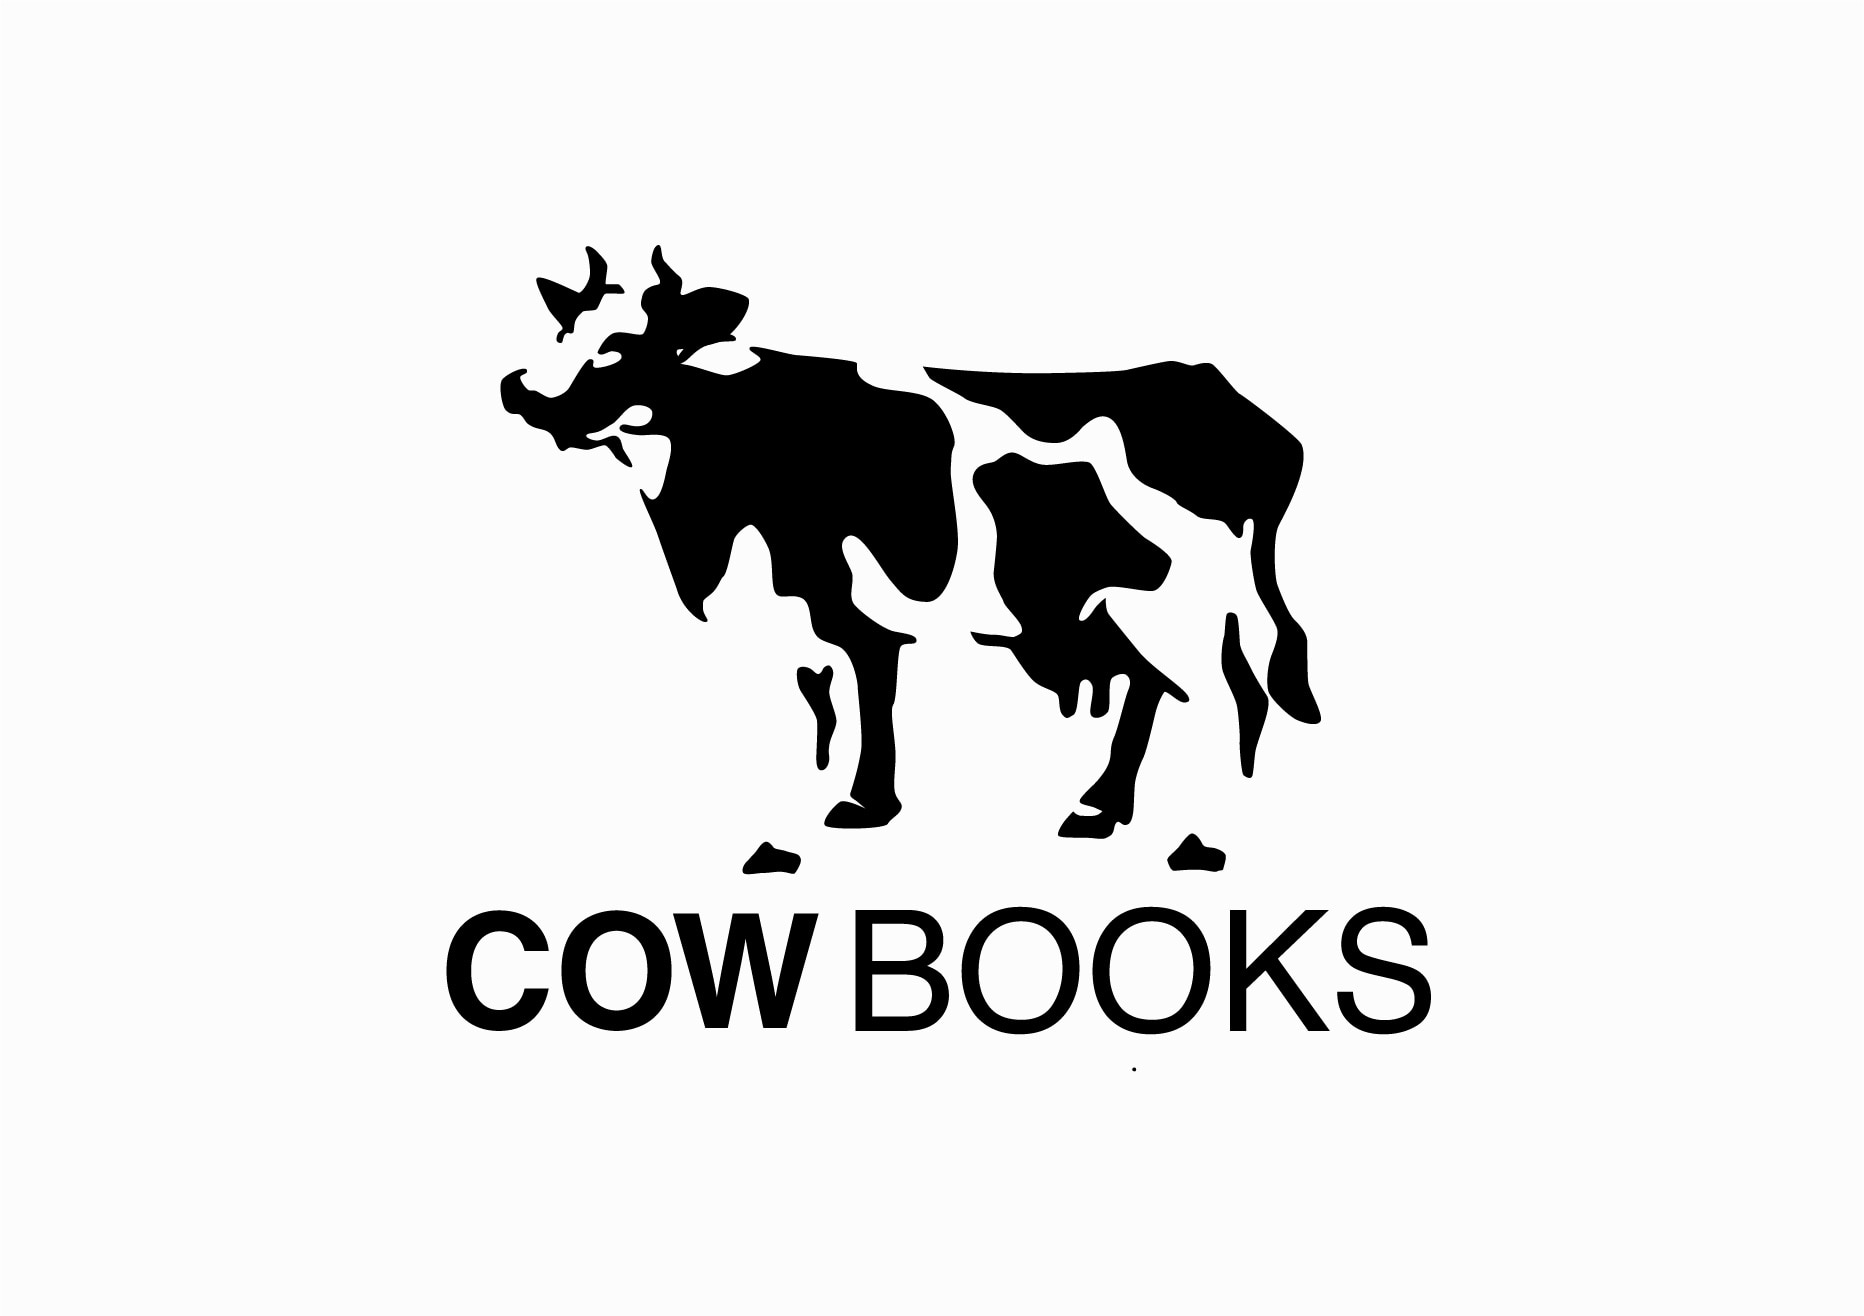 "cowbooks."